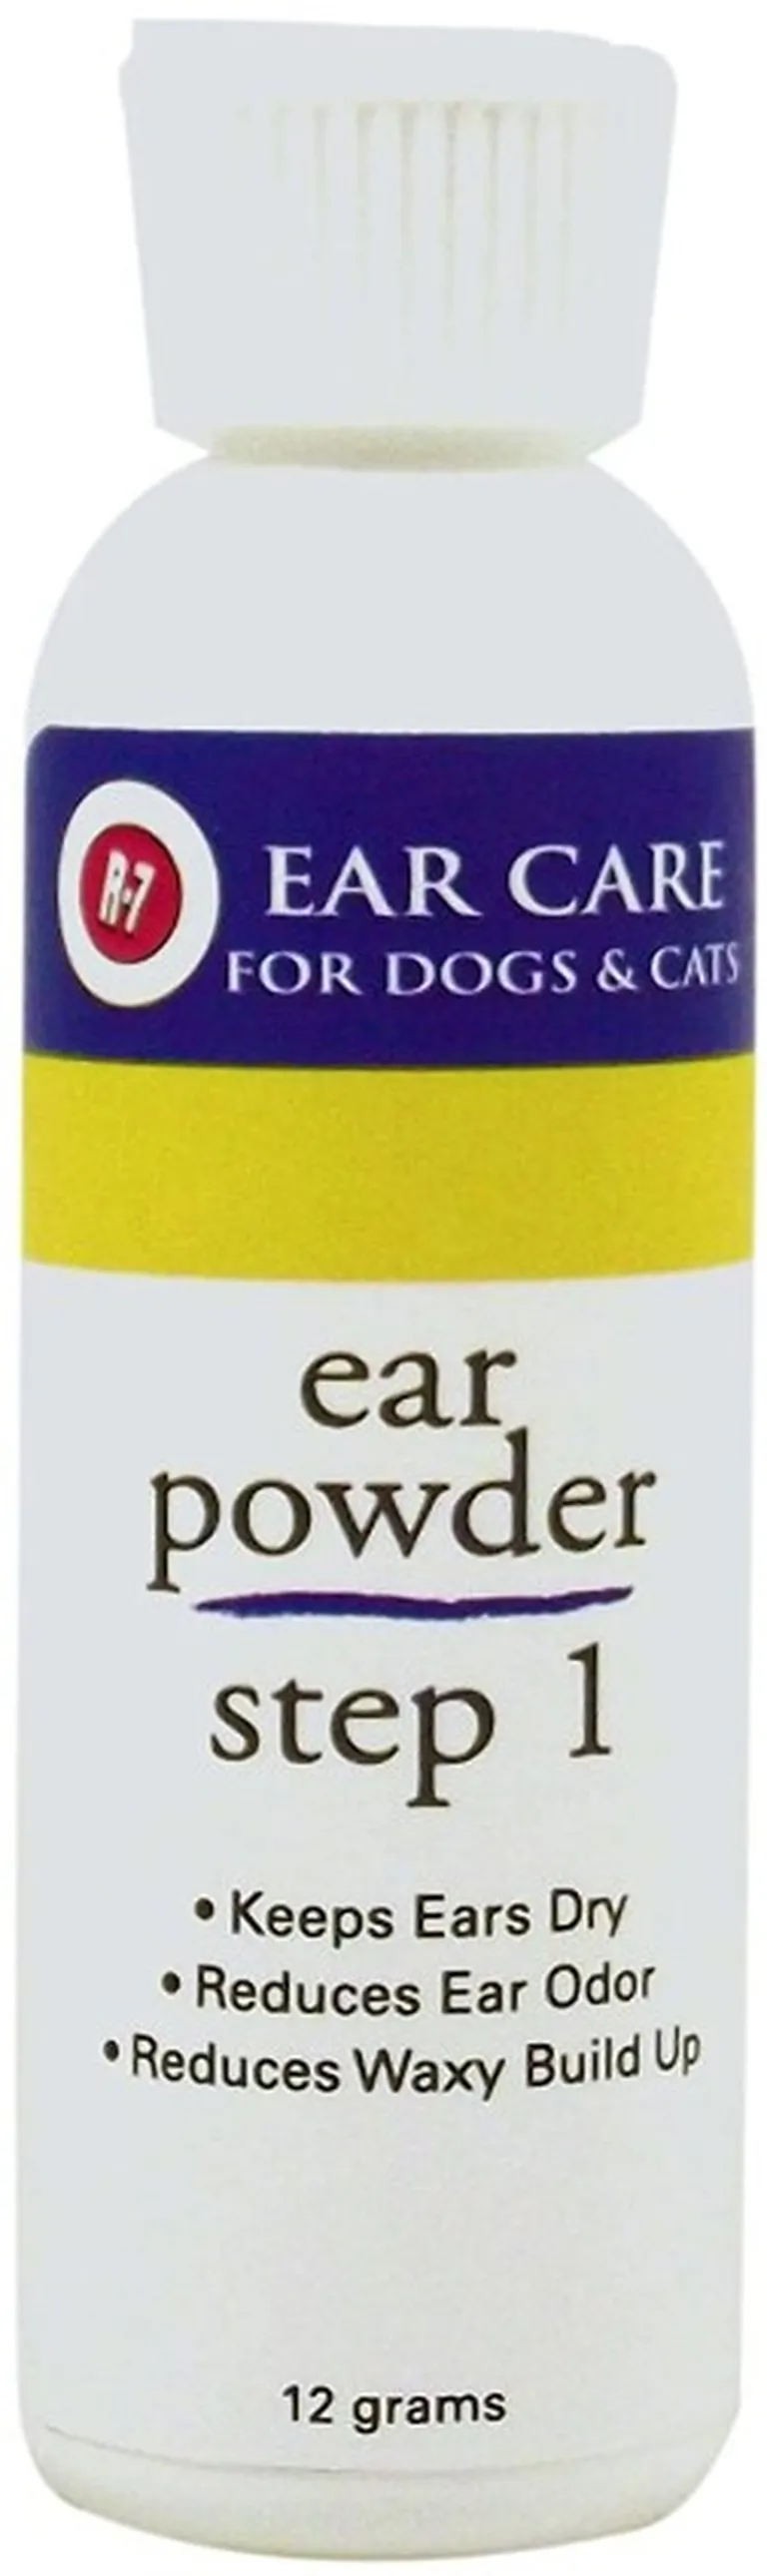 Miracle Care Ear Powder Step 1 Photo 1